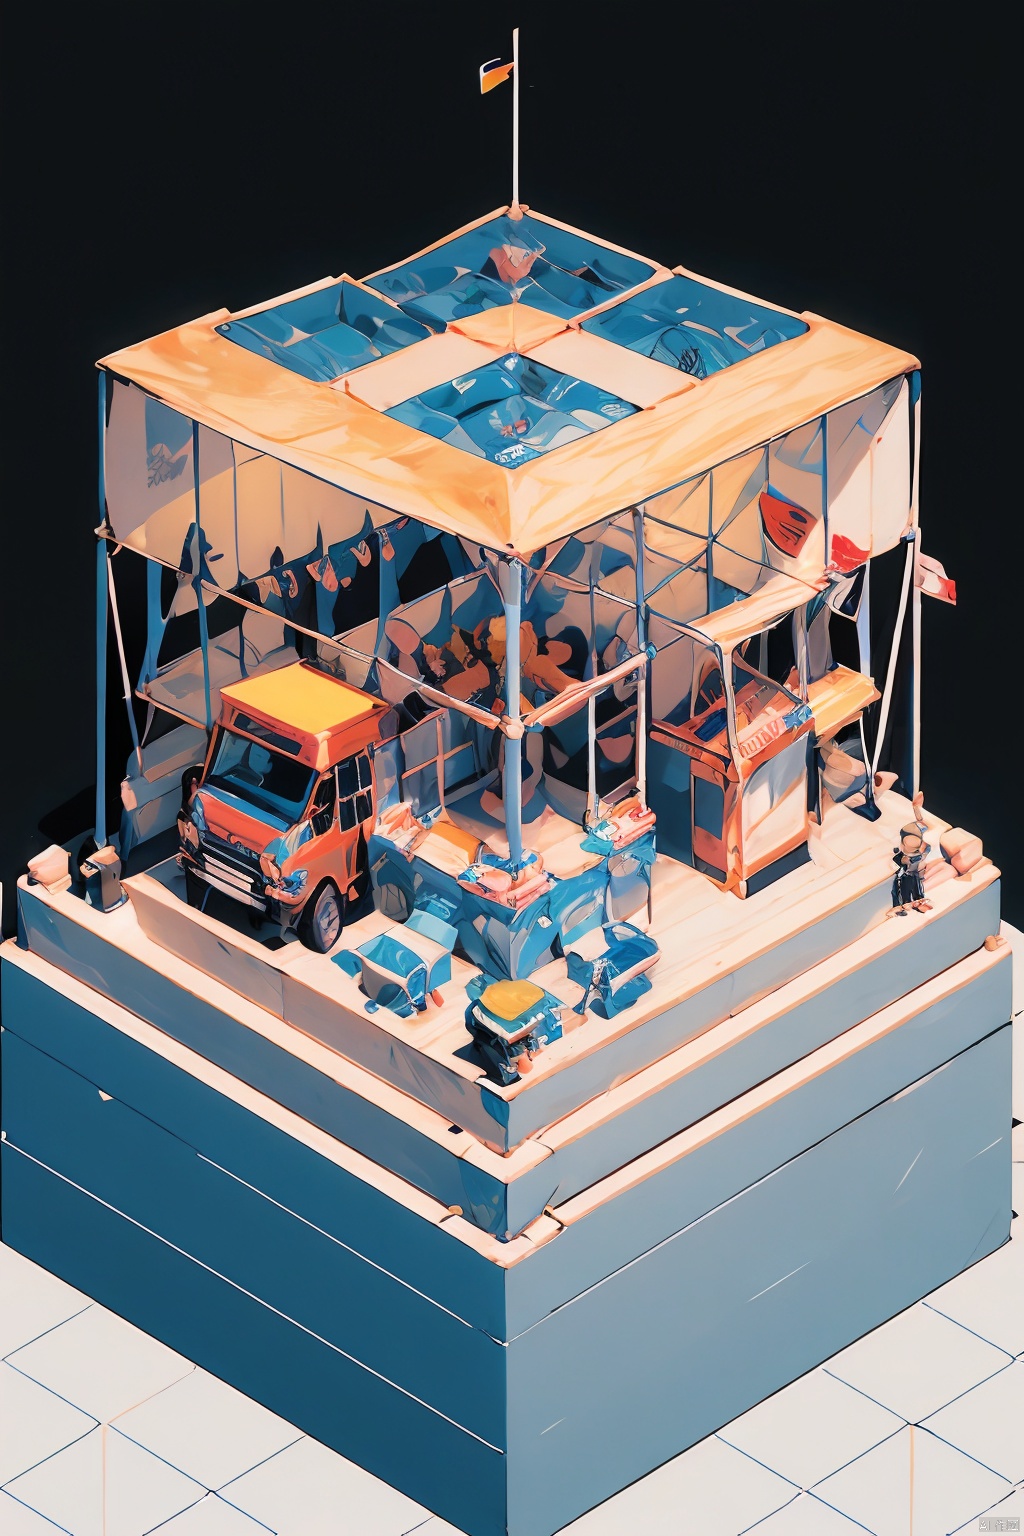 (Isometric Perspective:1.5),(Pixar Style:1.2),Amusement Park,Ferris Wheel,Circus,monkey,lion,tiger,flag,multimorph model game asset,pixel art,minecraft,LEGO style,tilt displacement,IP,blender,OC render,best quality,4k,super detail